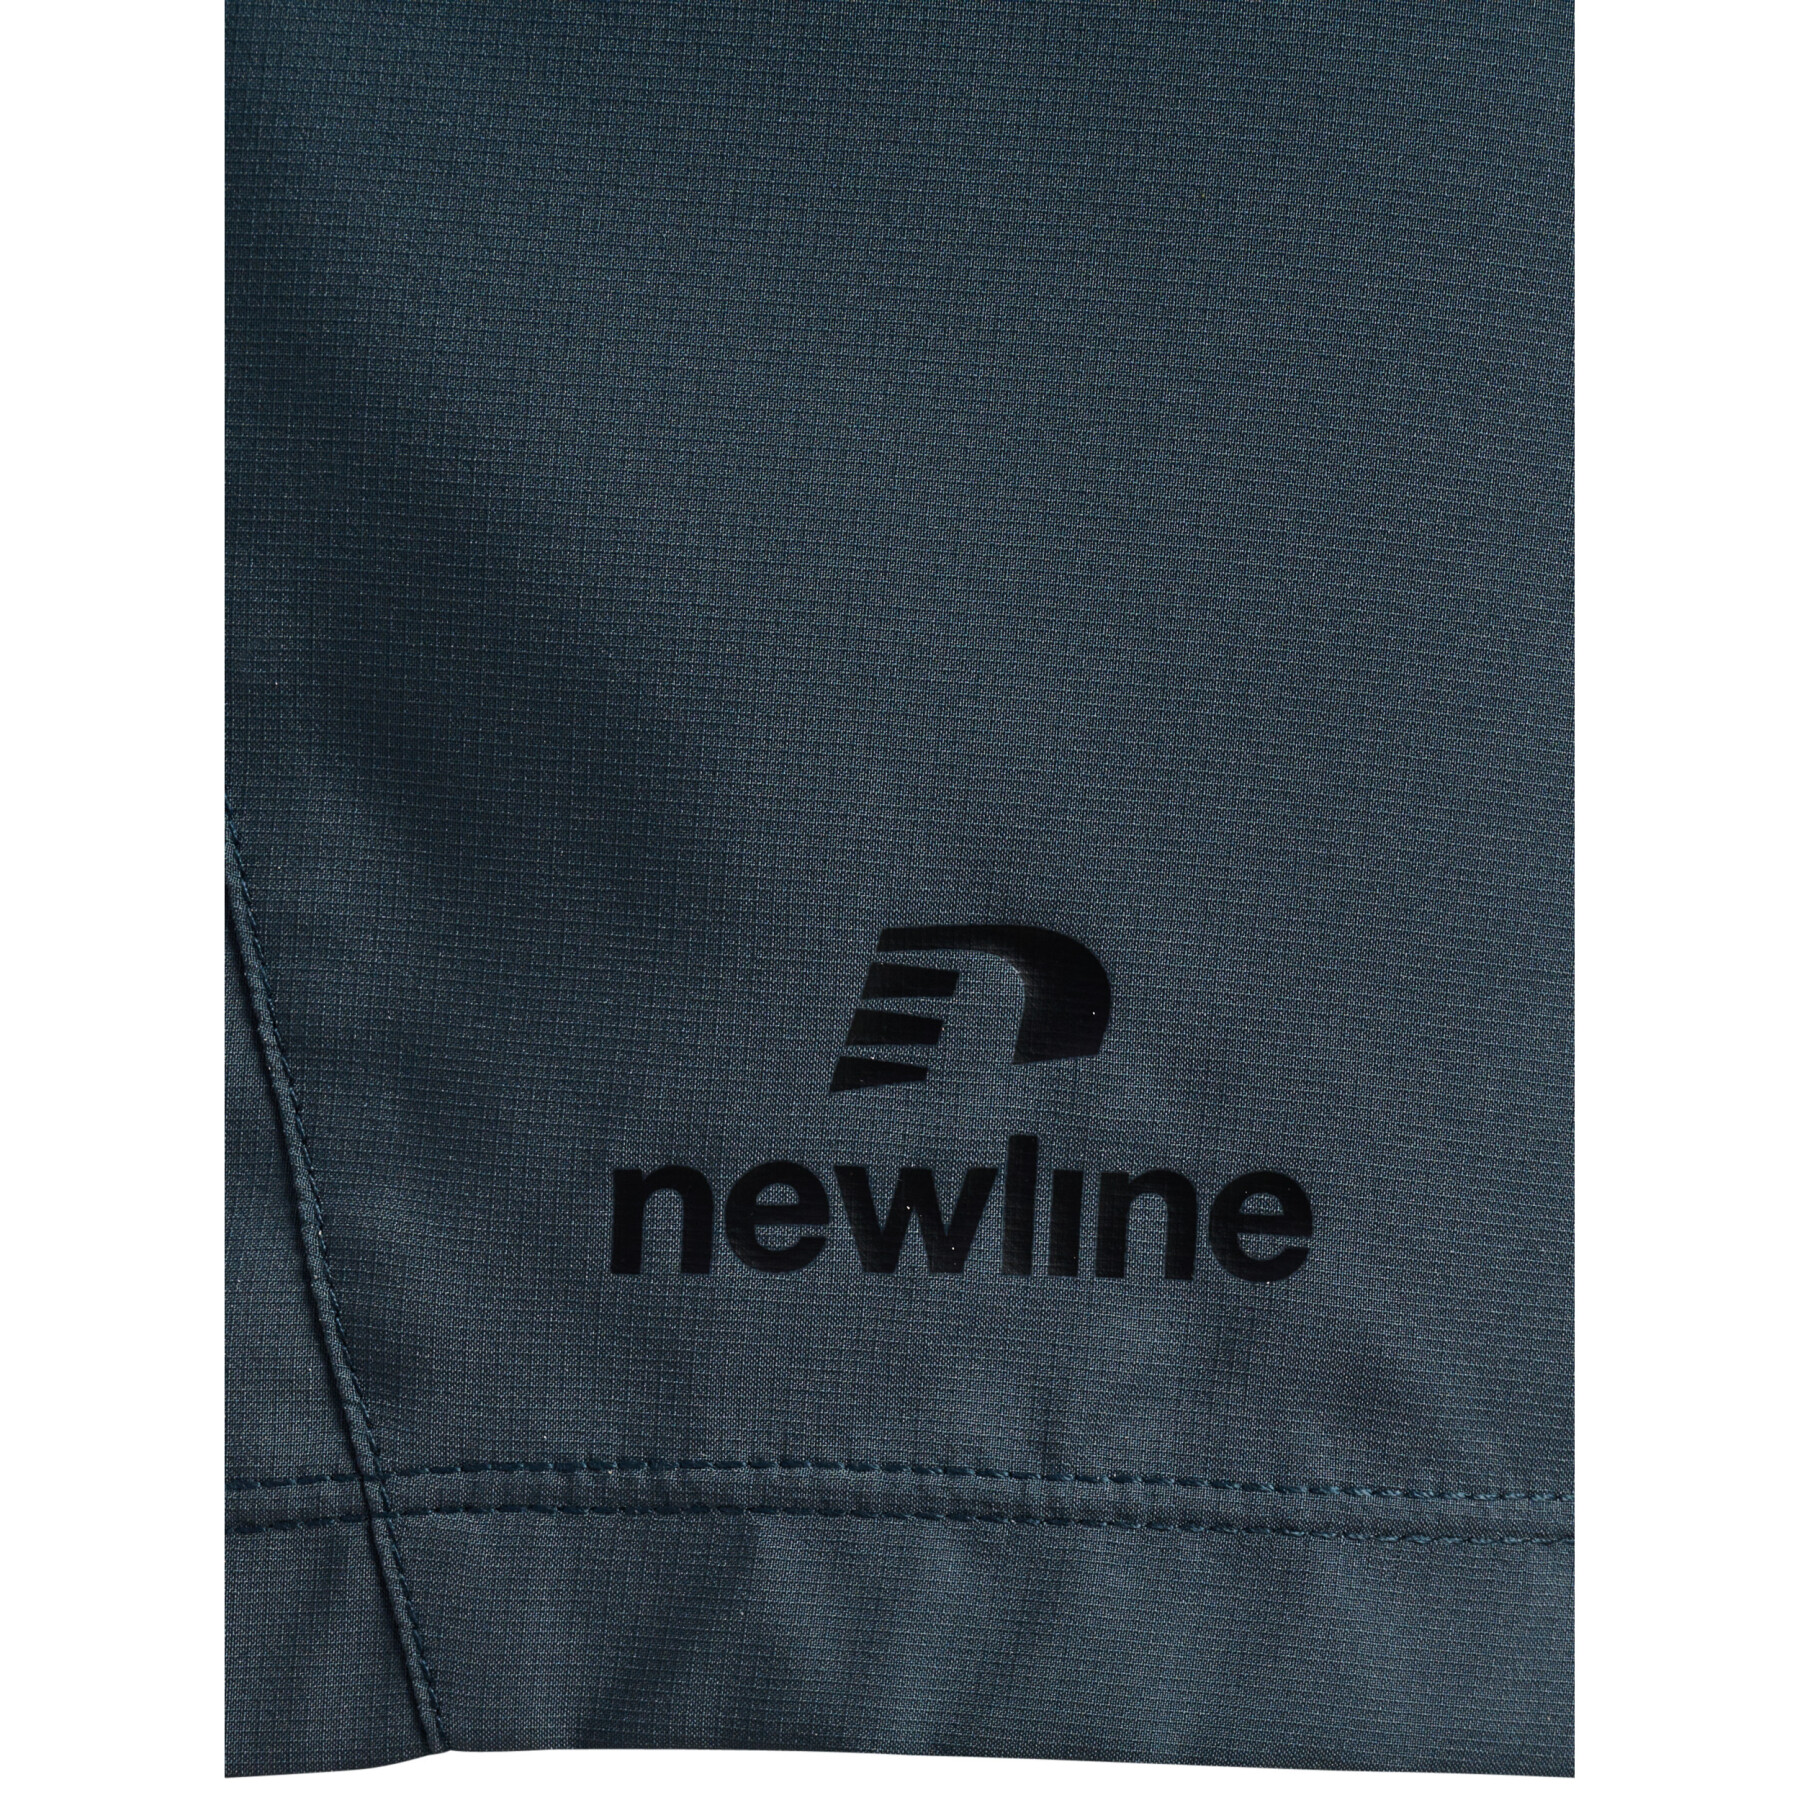 Breve Newline Perform Key Pocket